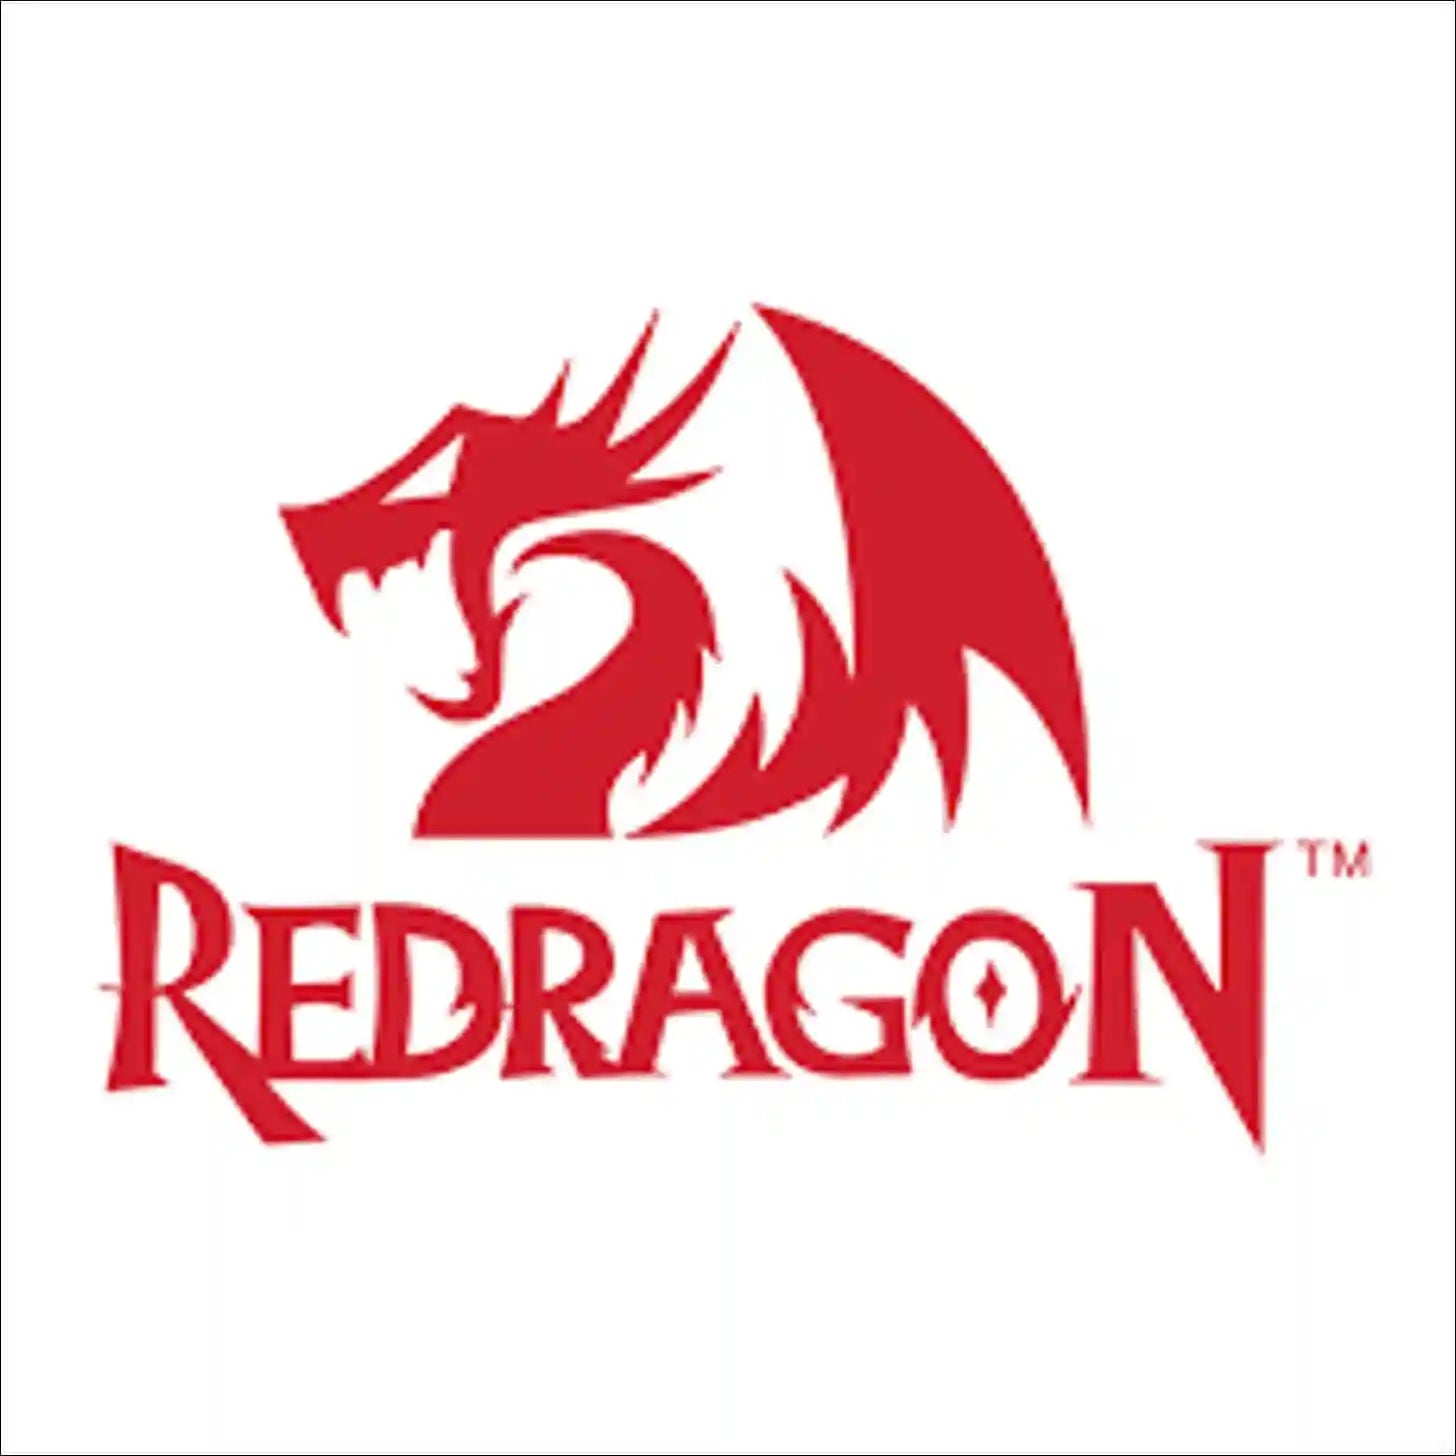 Redragon-logo-collection-image-of-sa-lot-bands-selling (12)